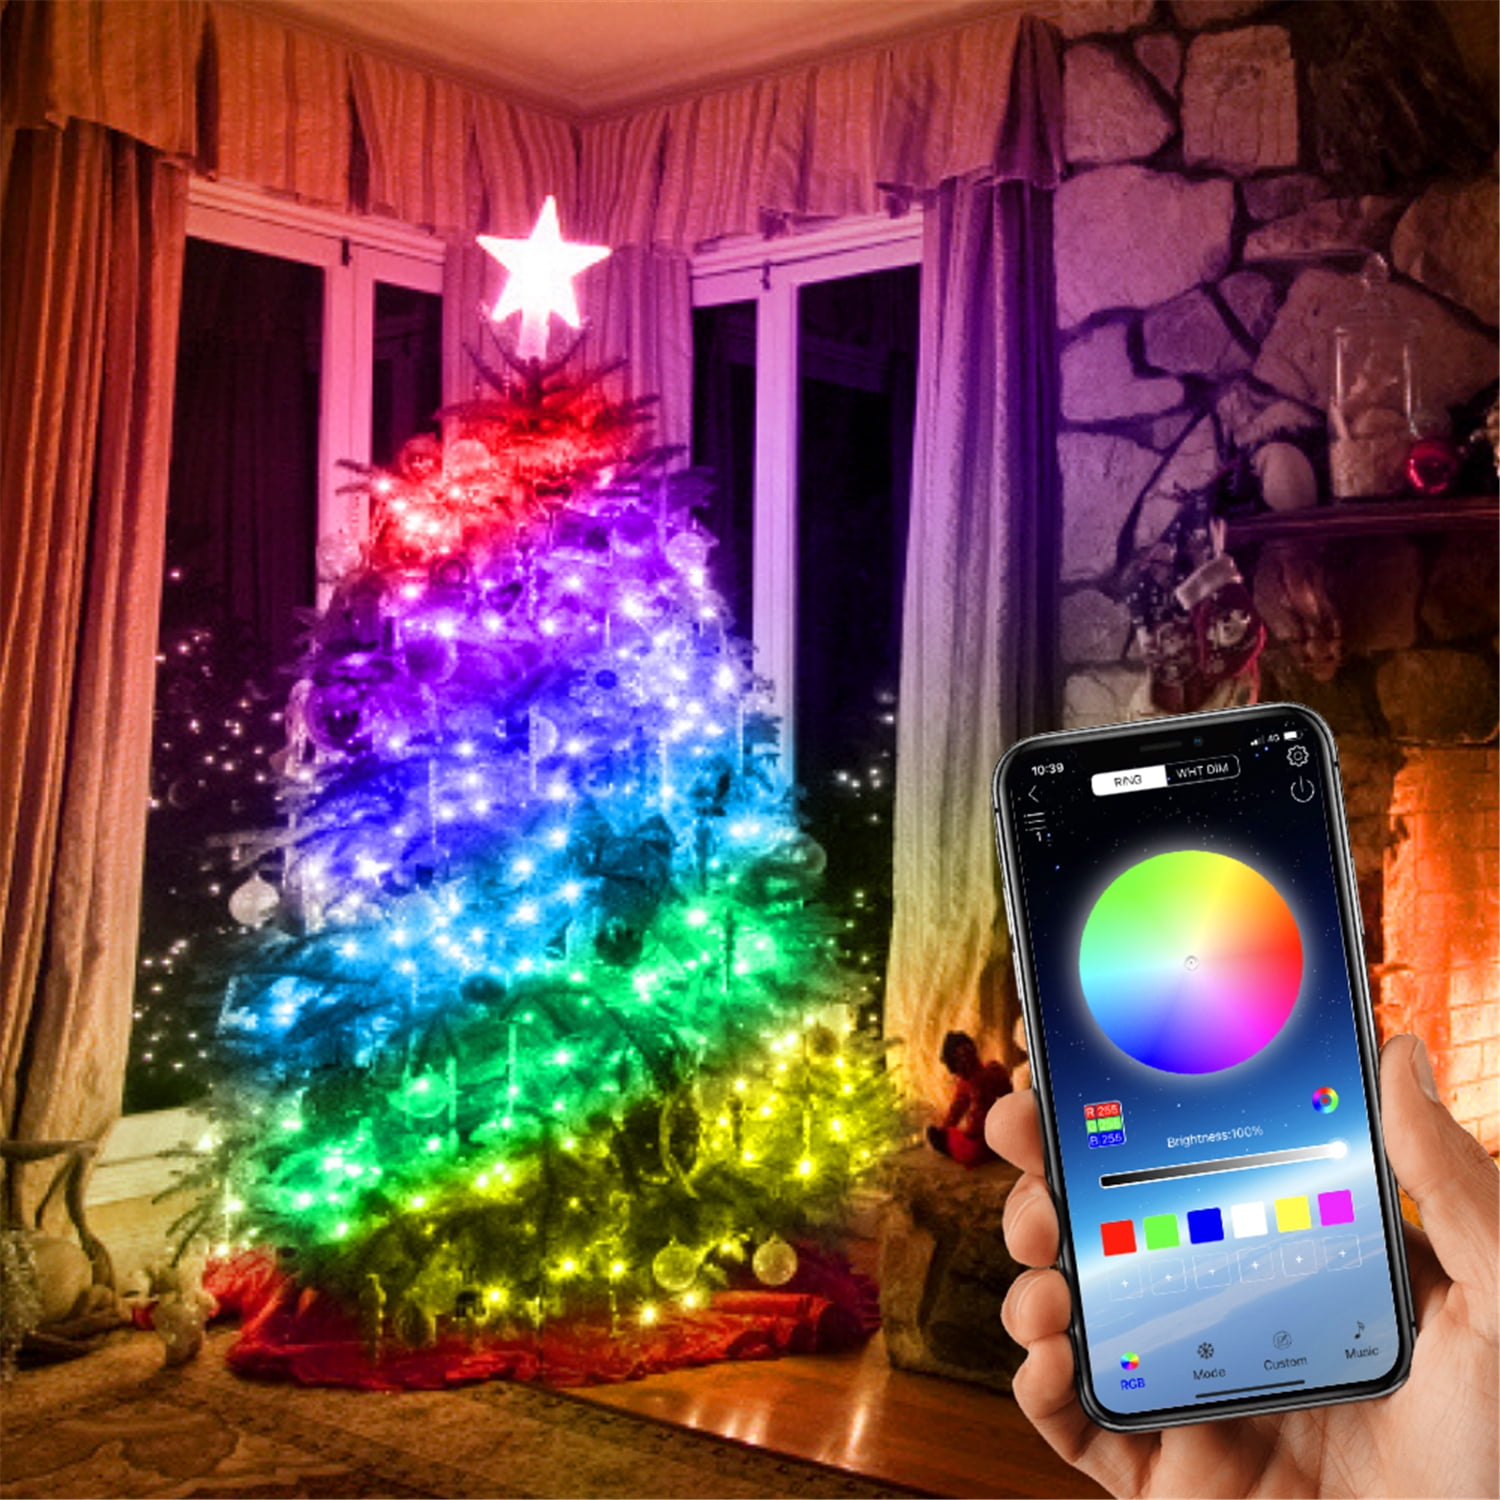 Christmas Tree Decoration Lights LED String Lamp Bluetooth App Remote Control US 